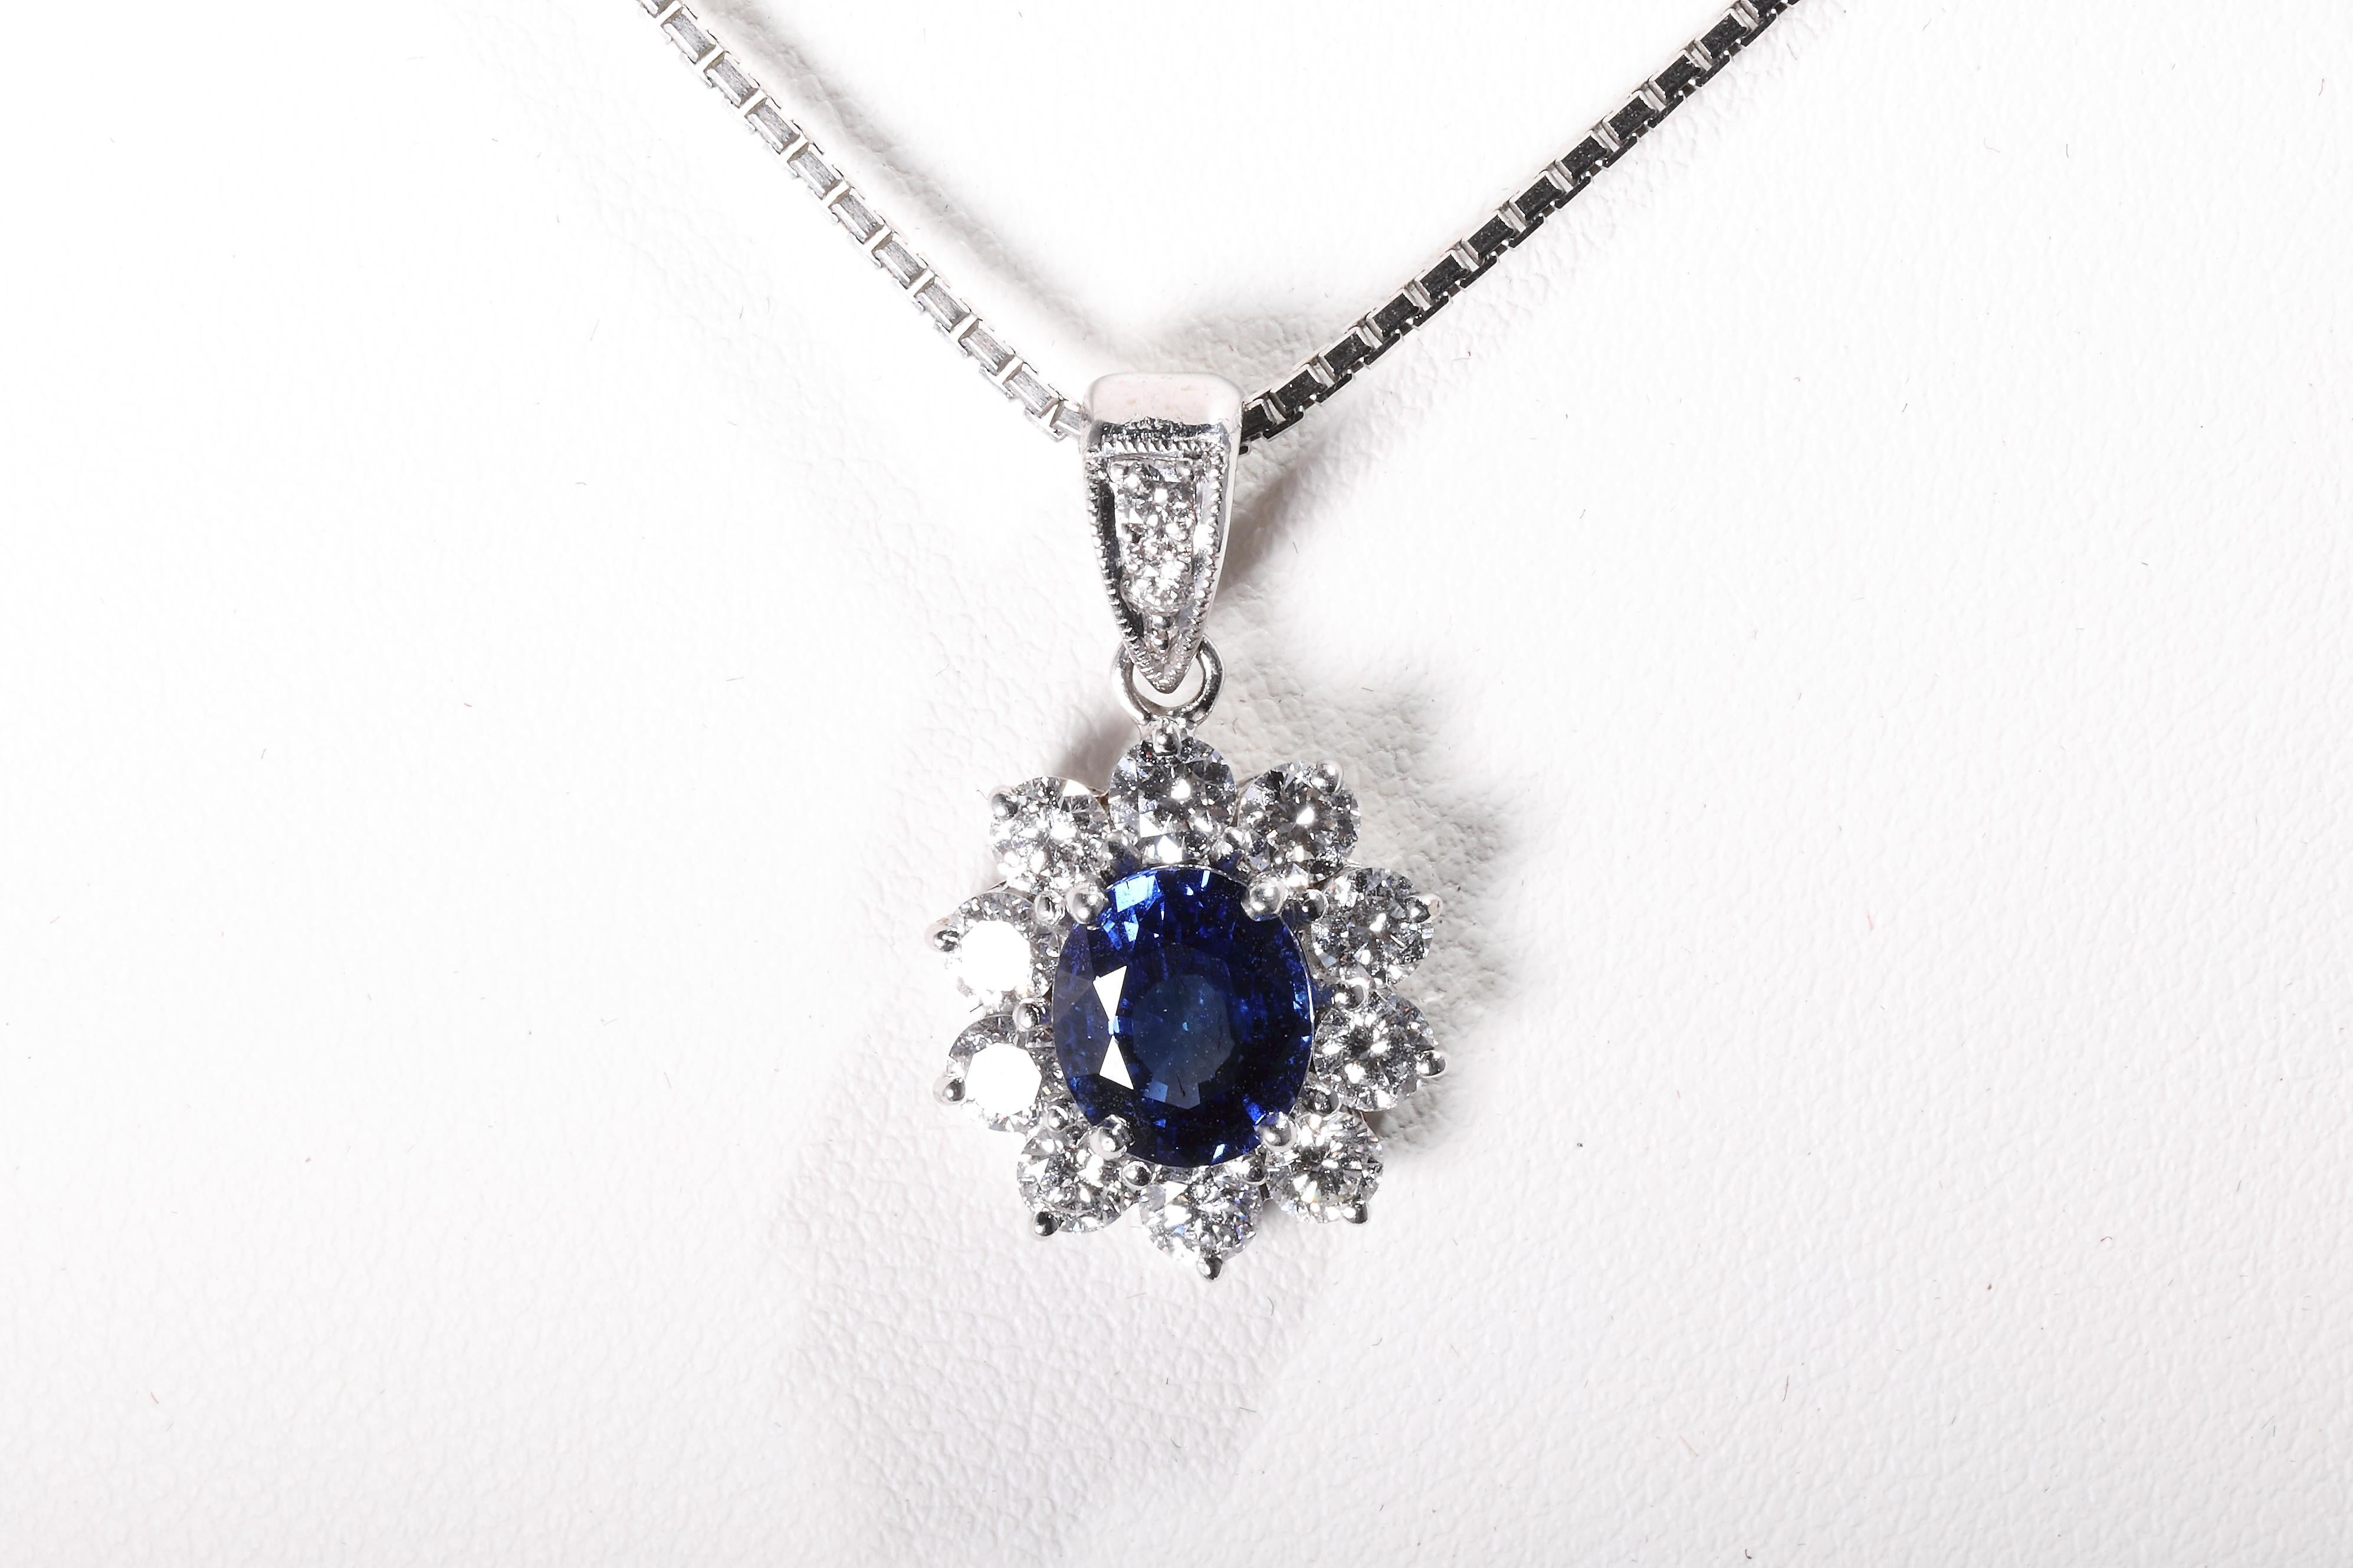 Sapphire diamond pendant
18k white gold
1,22 ct diamonds
1,90 ct sapphire
length approx. 20 mm
Width approx. 13 mm
weight 4 grams
